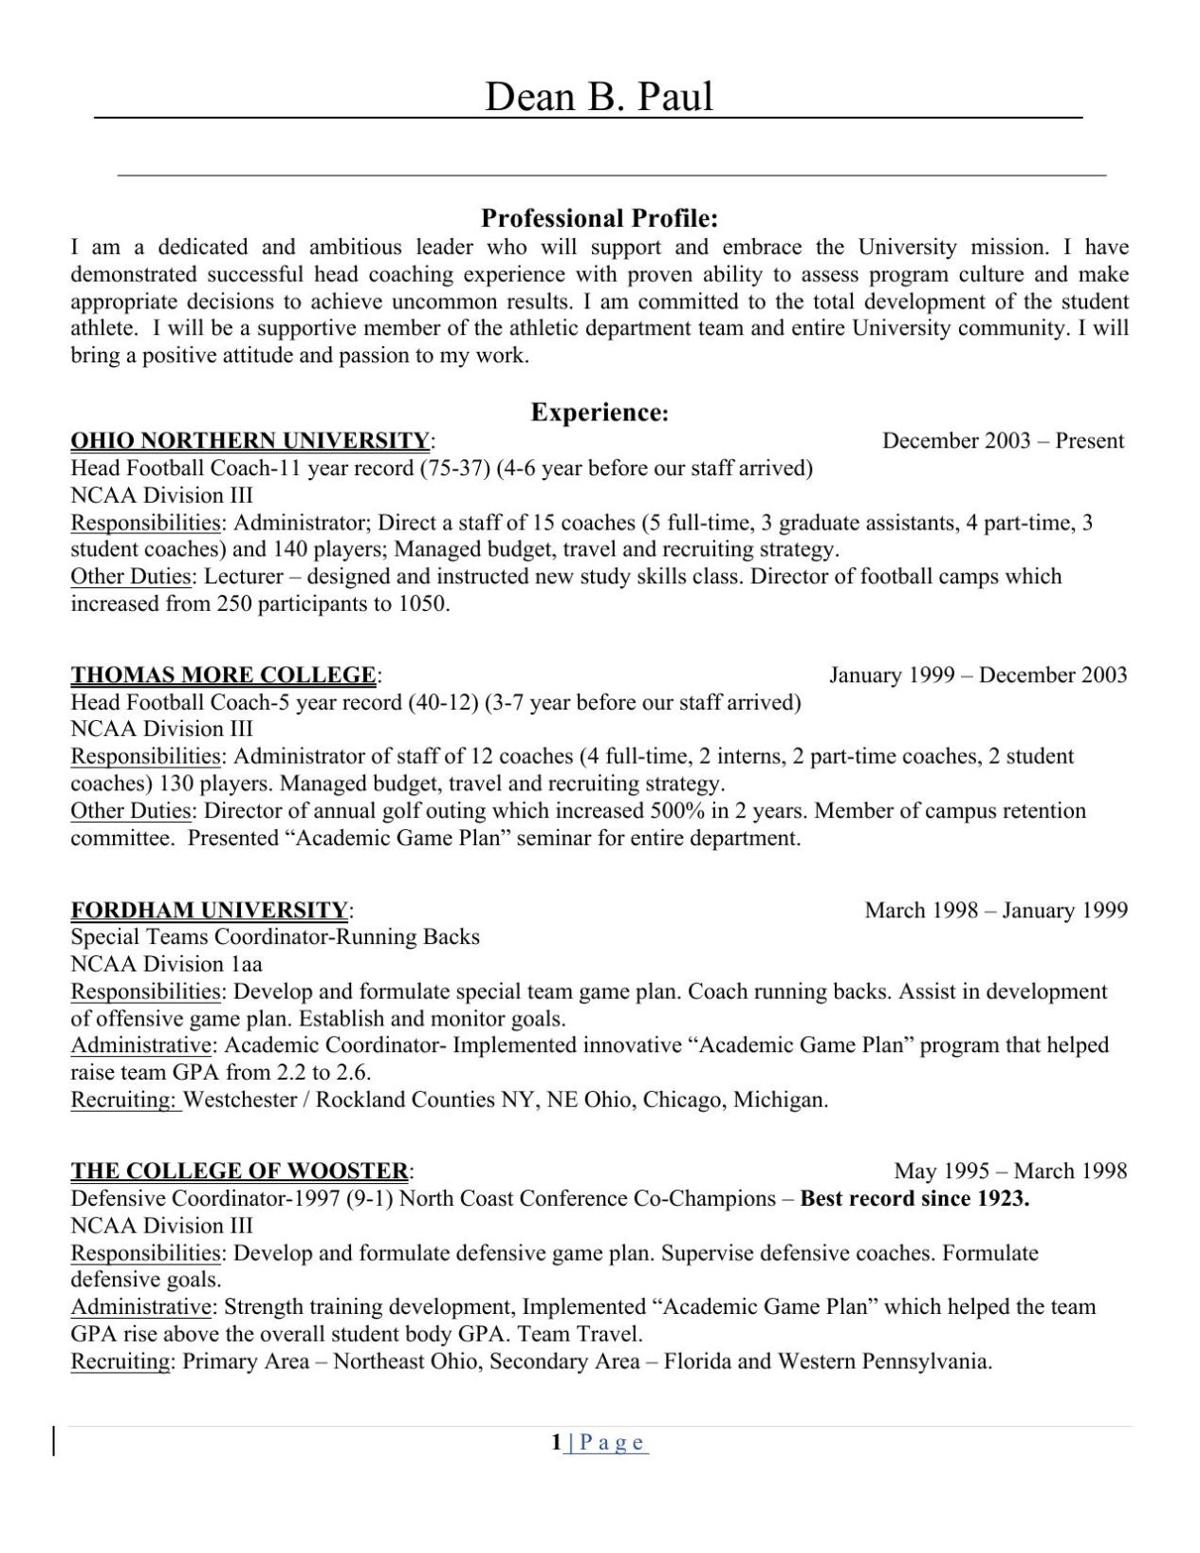 dean paul  resume for uw